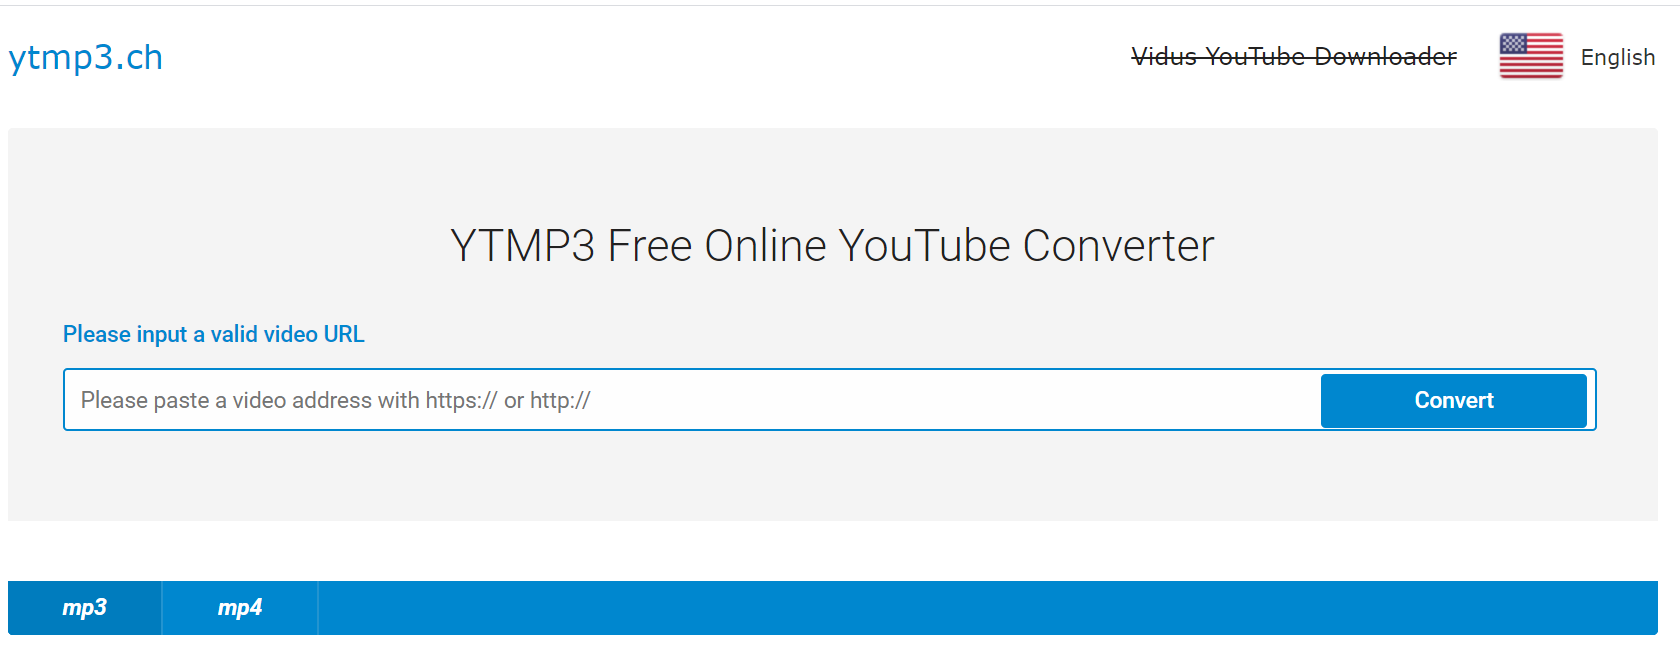 revisión del convertidor YTMP3 de YouTube a